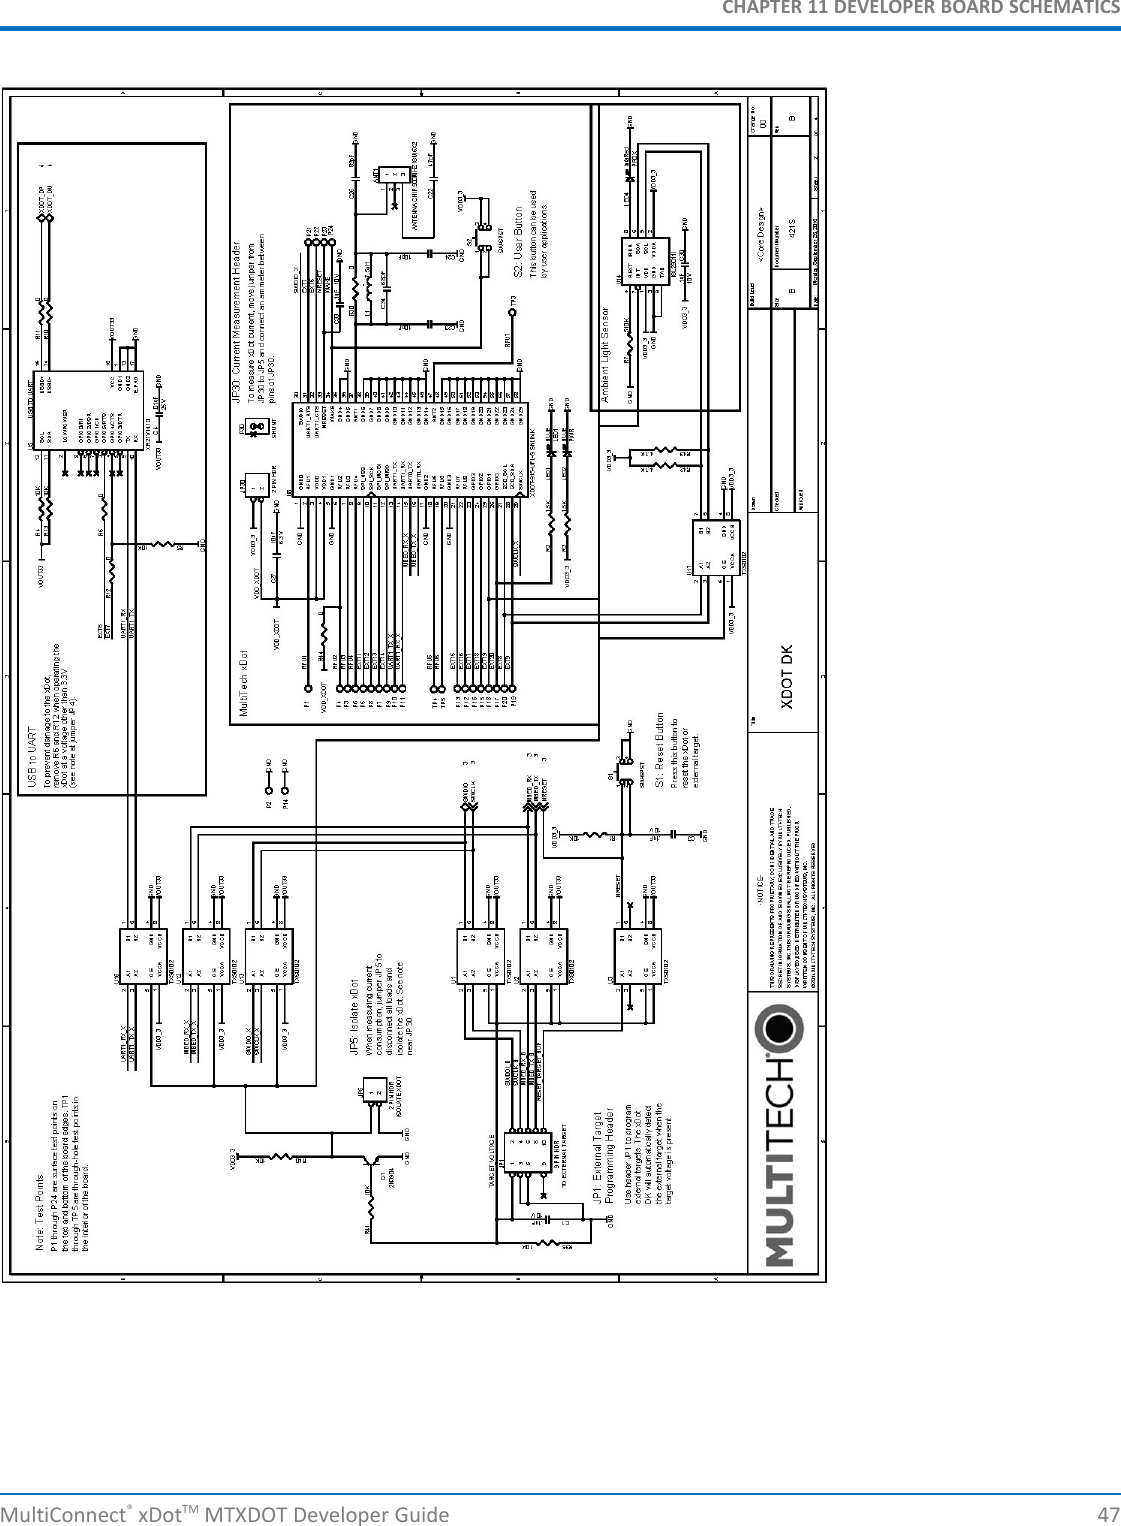 CHAPTER 11 DEVELOPER BOARD SCHEMATICSMultiConnect®xDotTM MTXDOT Developer Guide 47